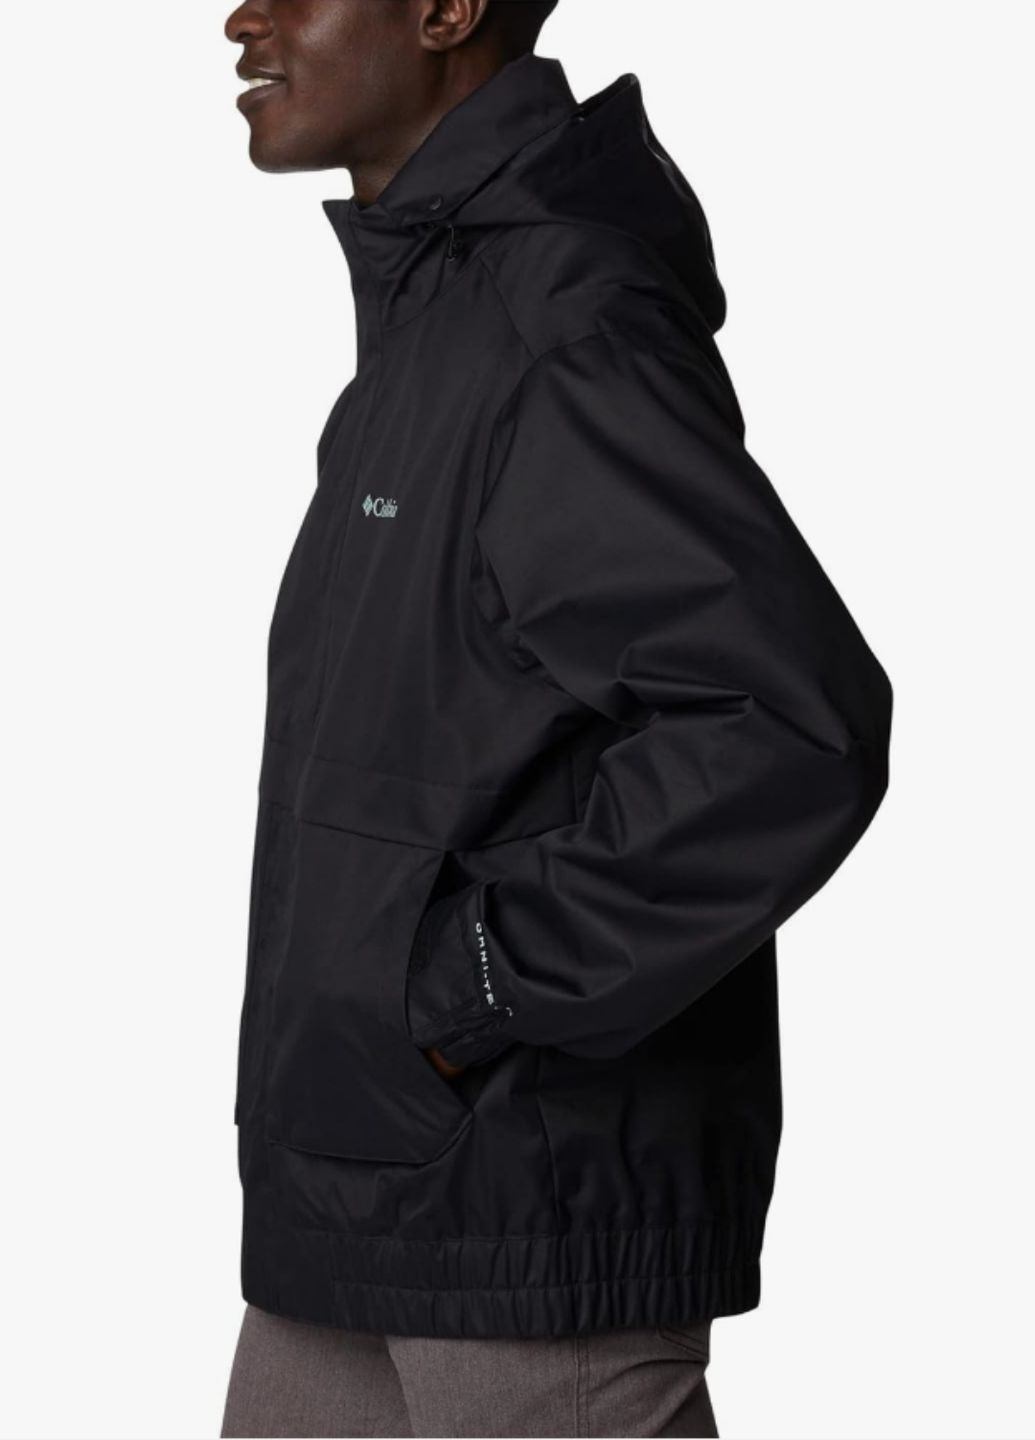 Черная демисезонная мужская куртка водонепроницаемая, дышащая, 48 р. Columbia Boundary Springs